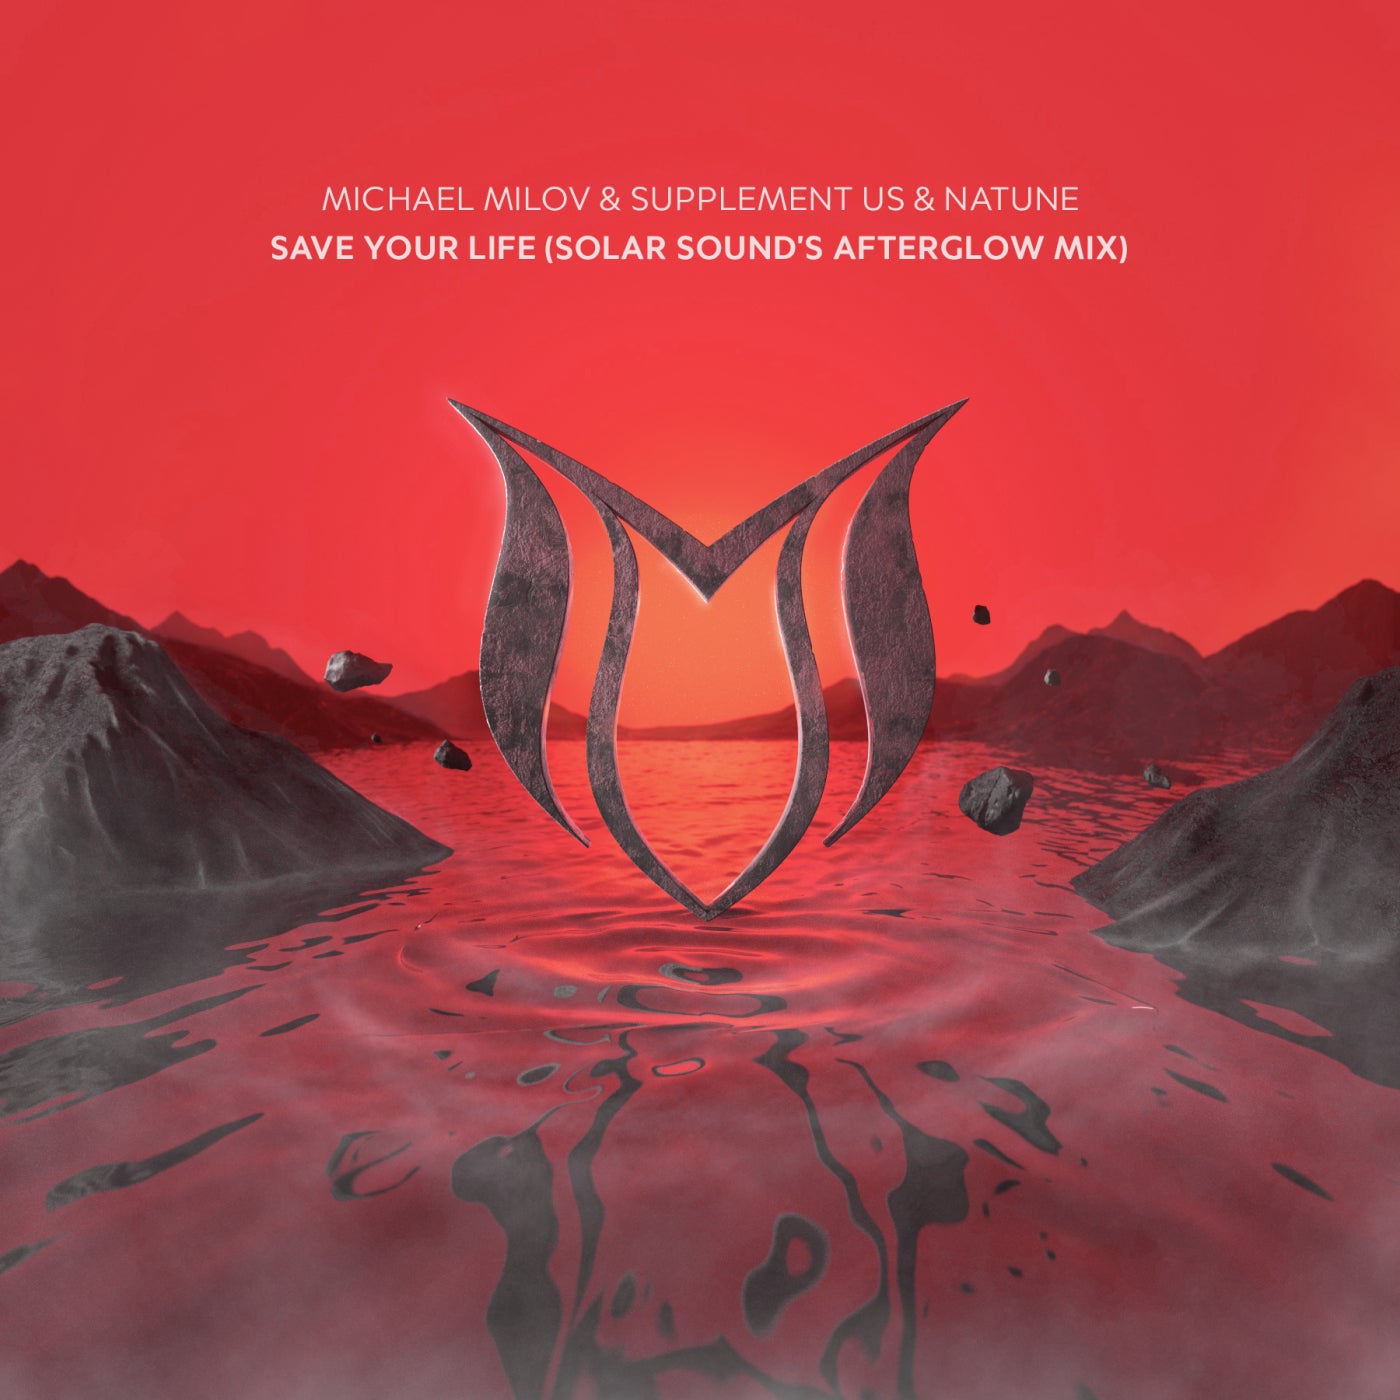 Supplement Us x Natune feat. Michael Milov - Save Your Life (Solar Sound's Afterglow Mix)